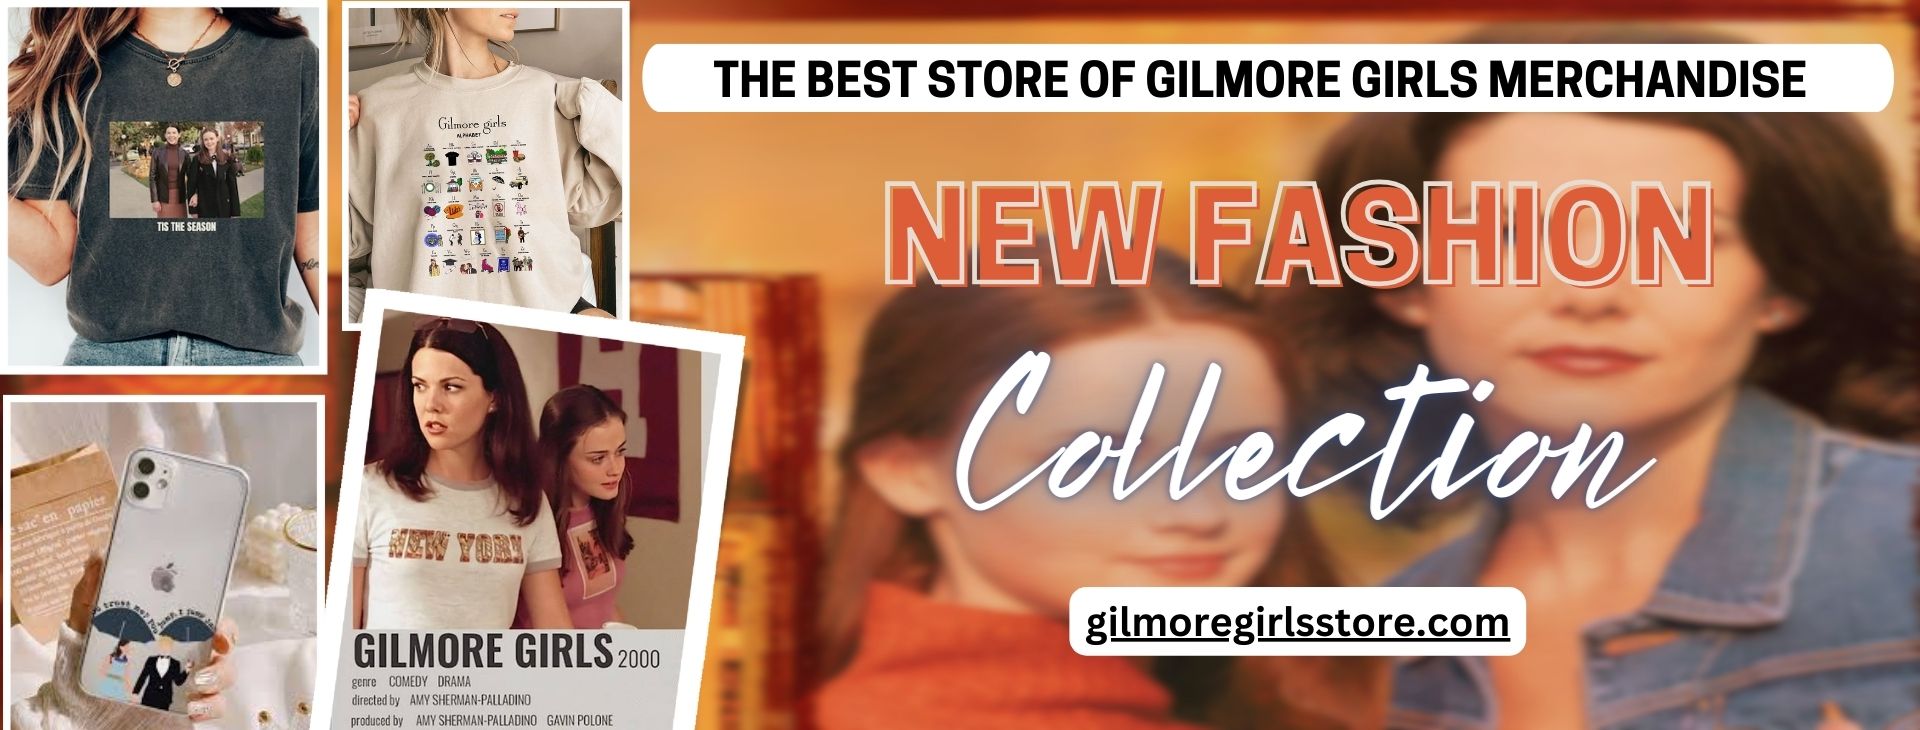 no edit gilmore - Gilmore Girls Store